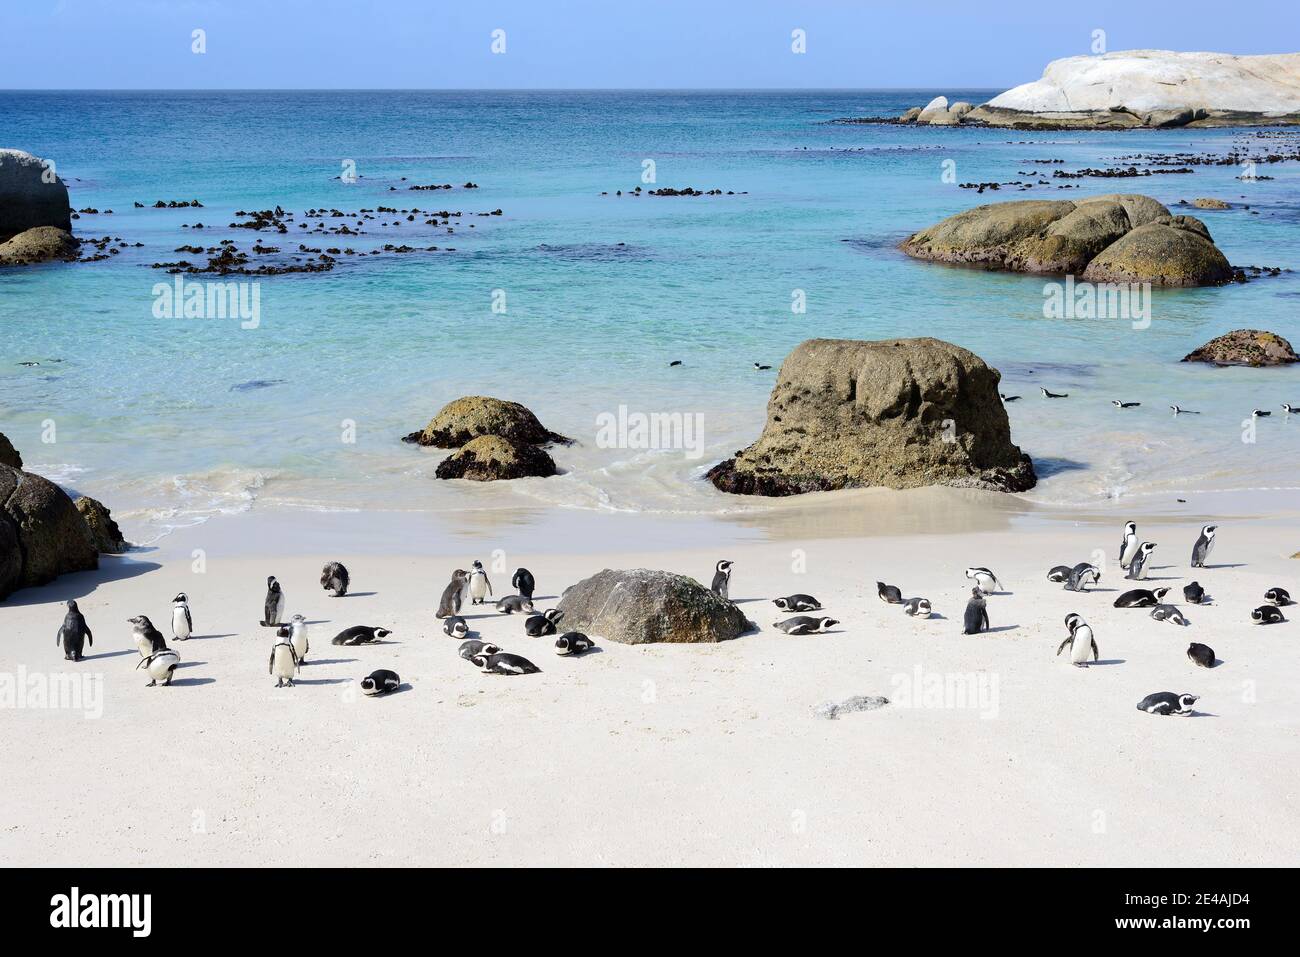 Kolonie afrikanischer Pinguine (Spheniscus demersus) am Strand, Boulders Beach oder Boulders Bay, Simons Town, Südafrika, Indischer Ozean Stockfoto